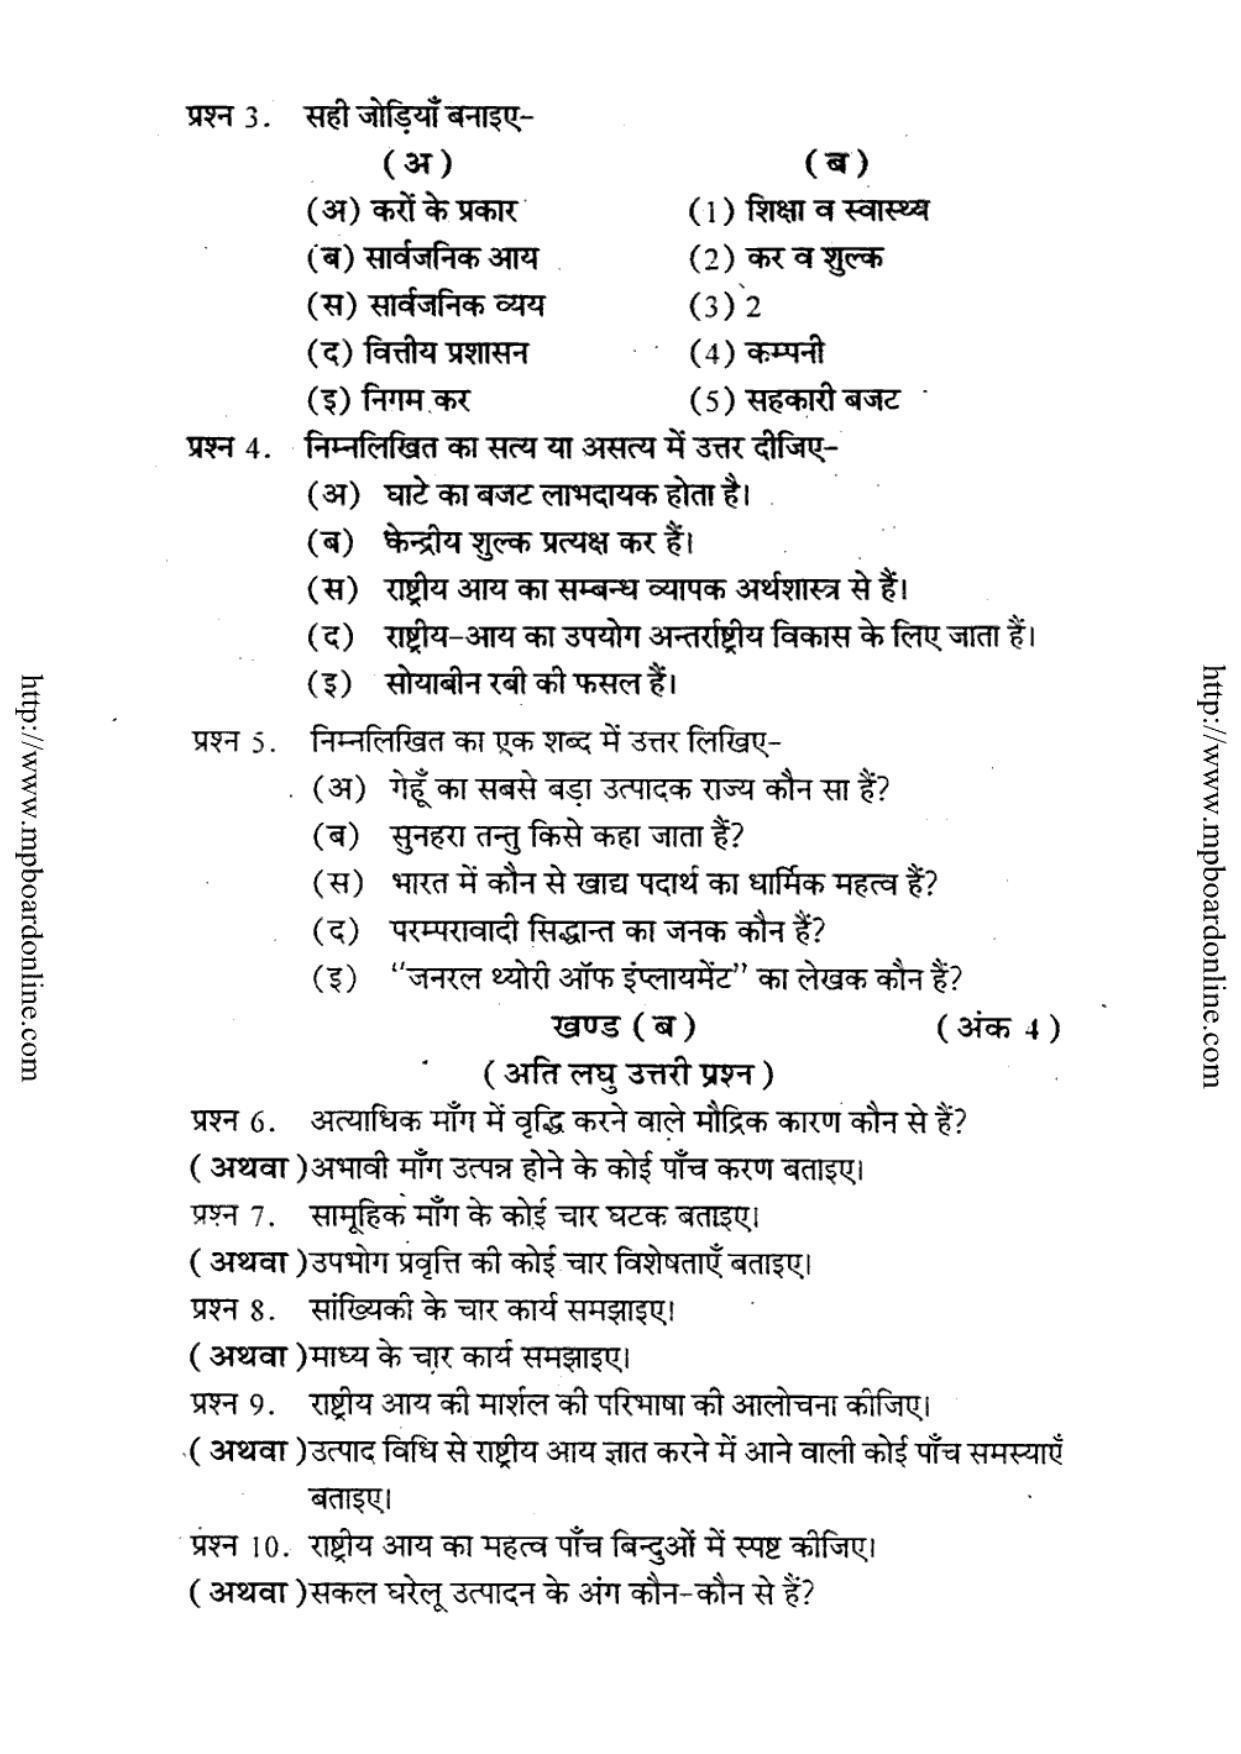 MP Board Class 12 Vyavsayik Arthshastra (Hindi Medium) 2010 Question Paper - Page 2